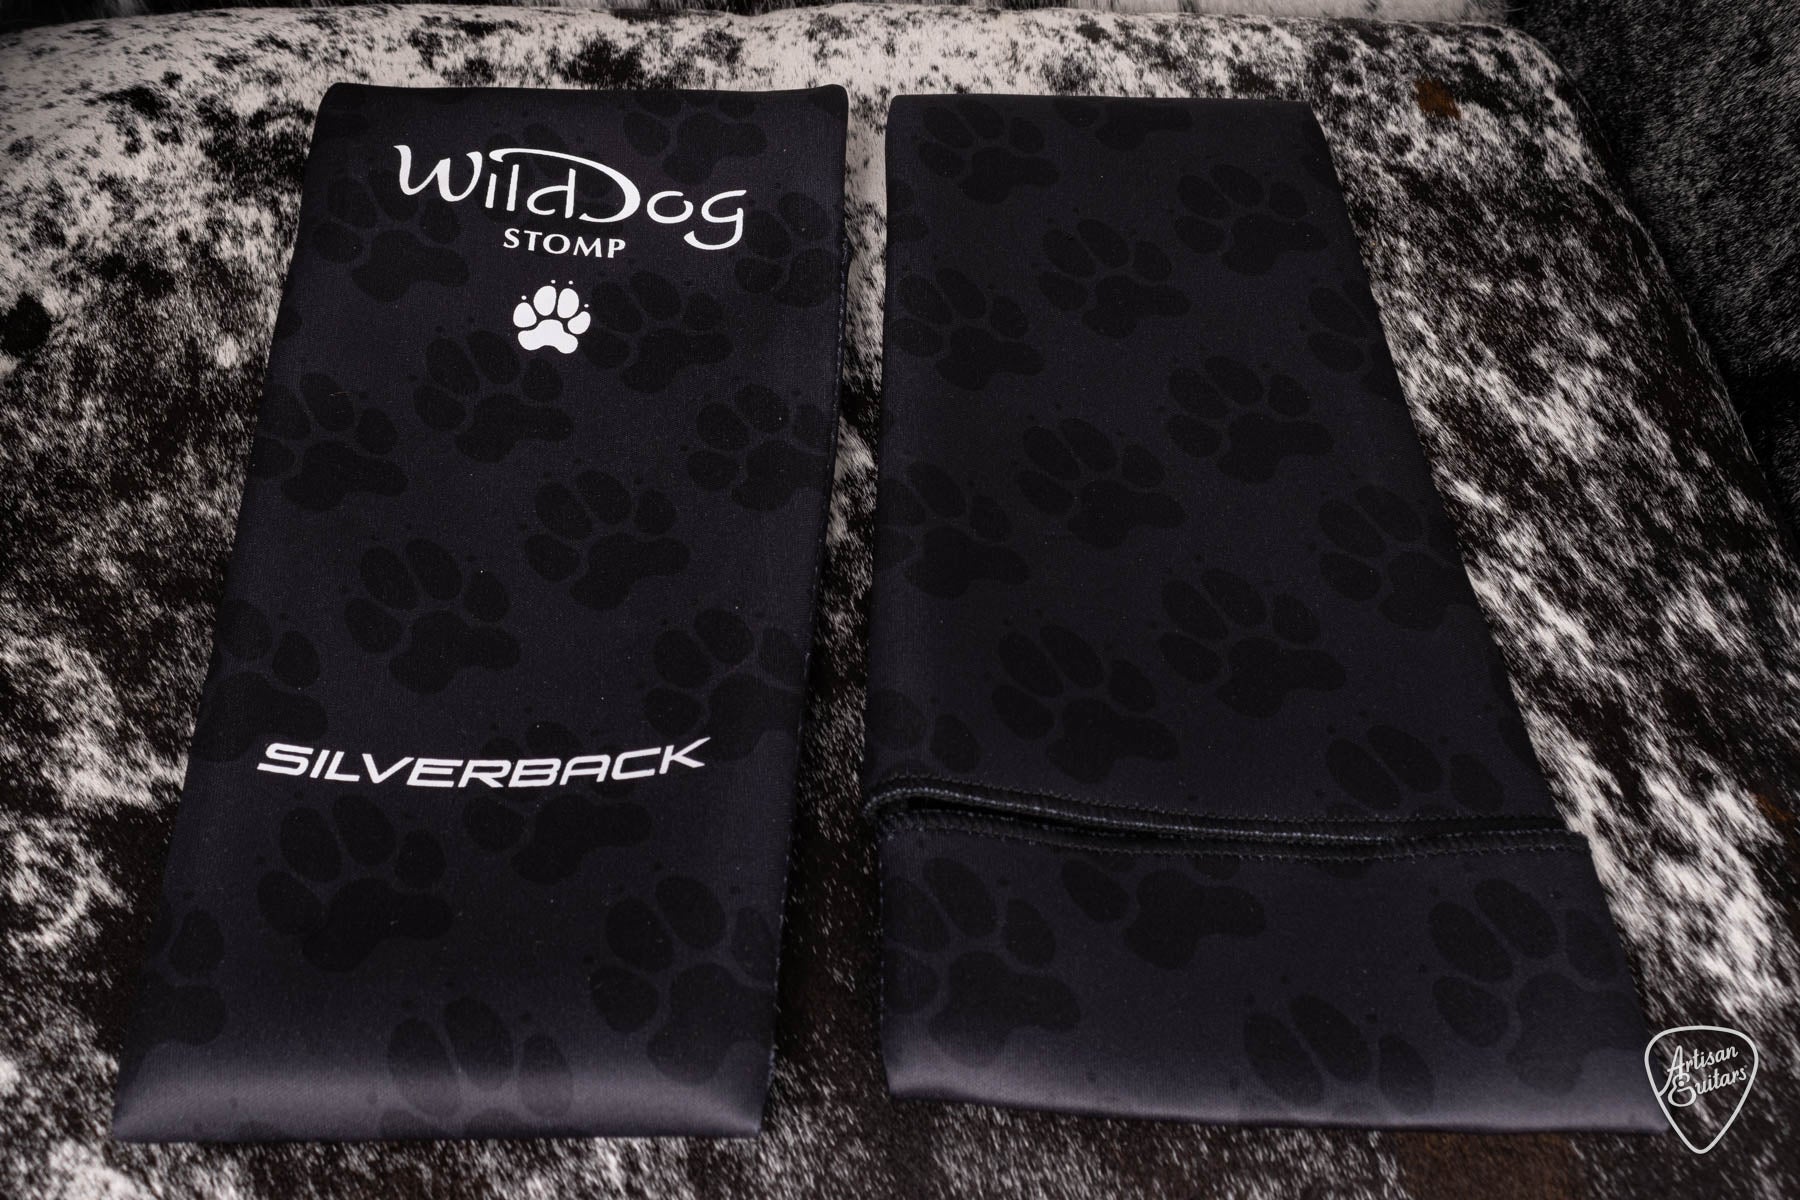 Wild Dog Silverback Stomp Box with Jingles - 16670